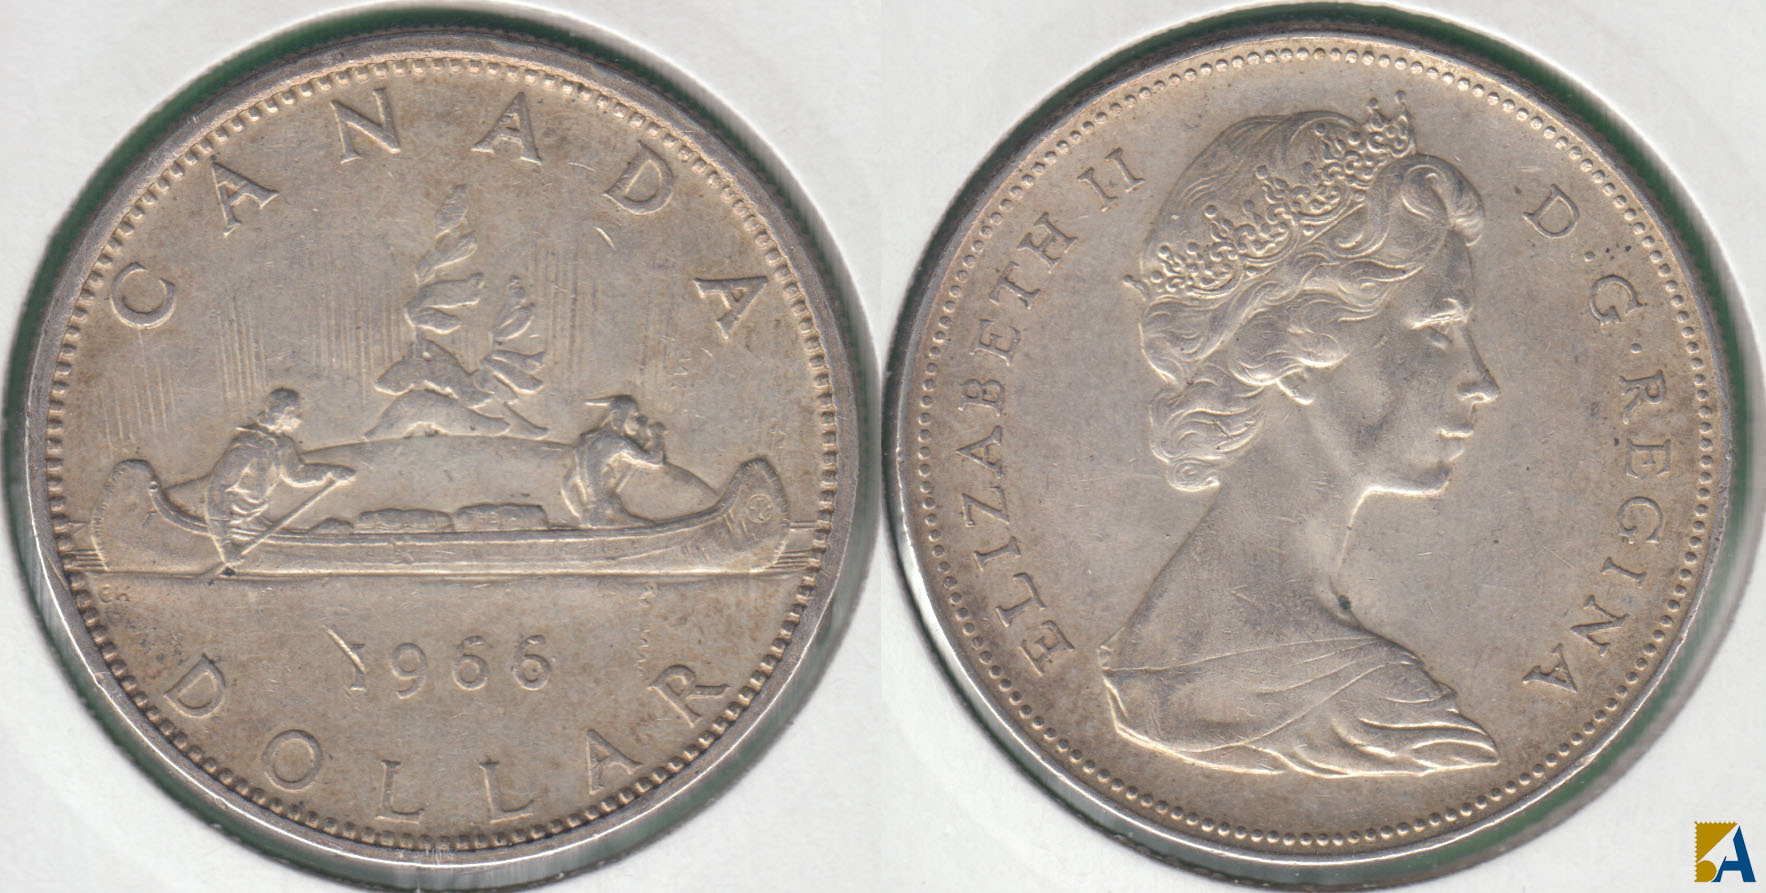 CANADA. 1 DOLAR (DOLLAR) DE 1966. PLATA 0.800.